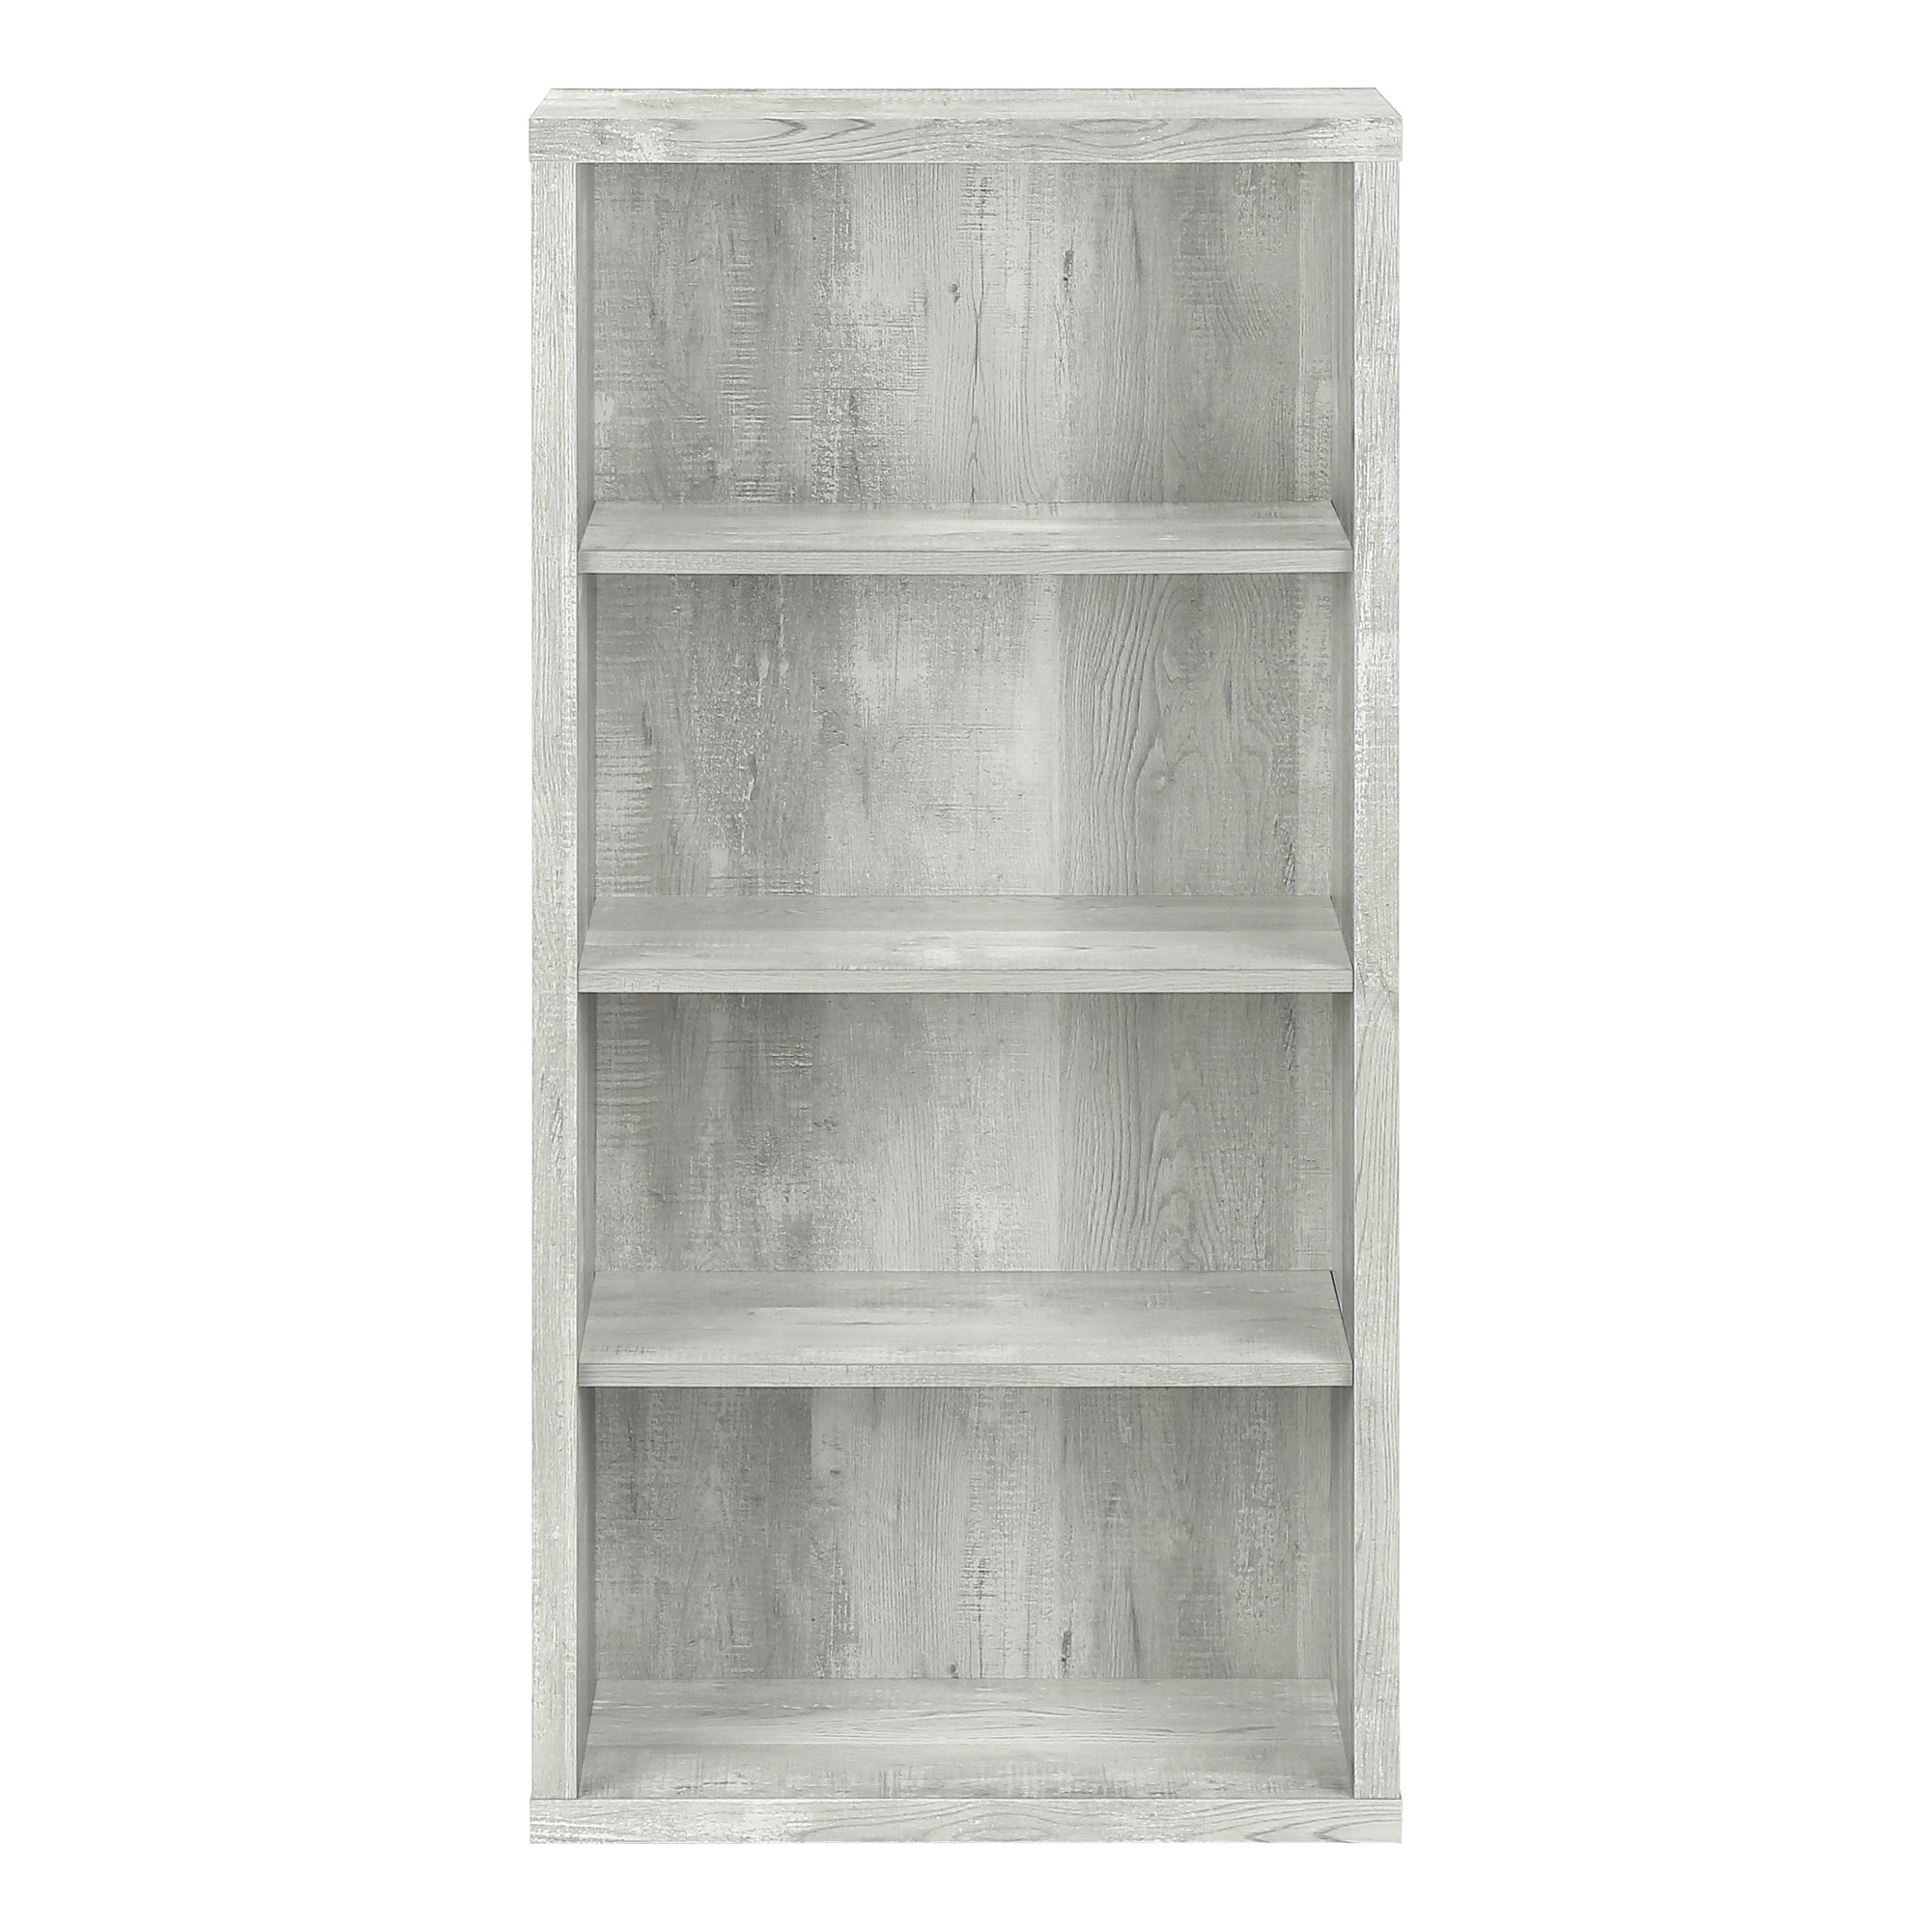 MN-717405    Bookshelf, Bookcase, Etagere, 5 Tier, Office, Bedroom, 48"H, Laminate, Grey Reclaimed Wood Look, Black, Contemporary, Modern